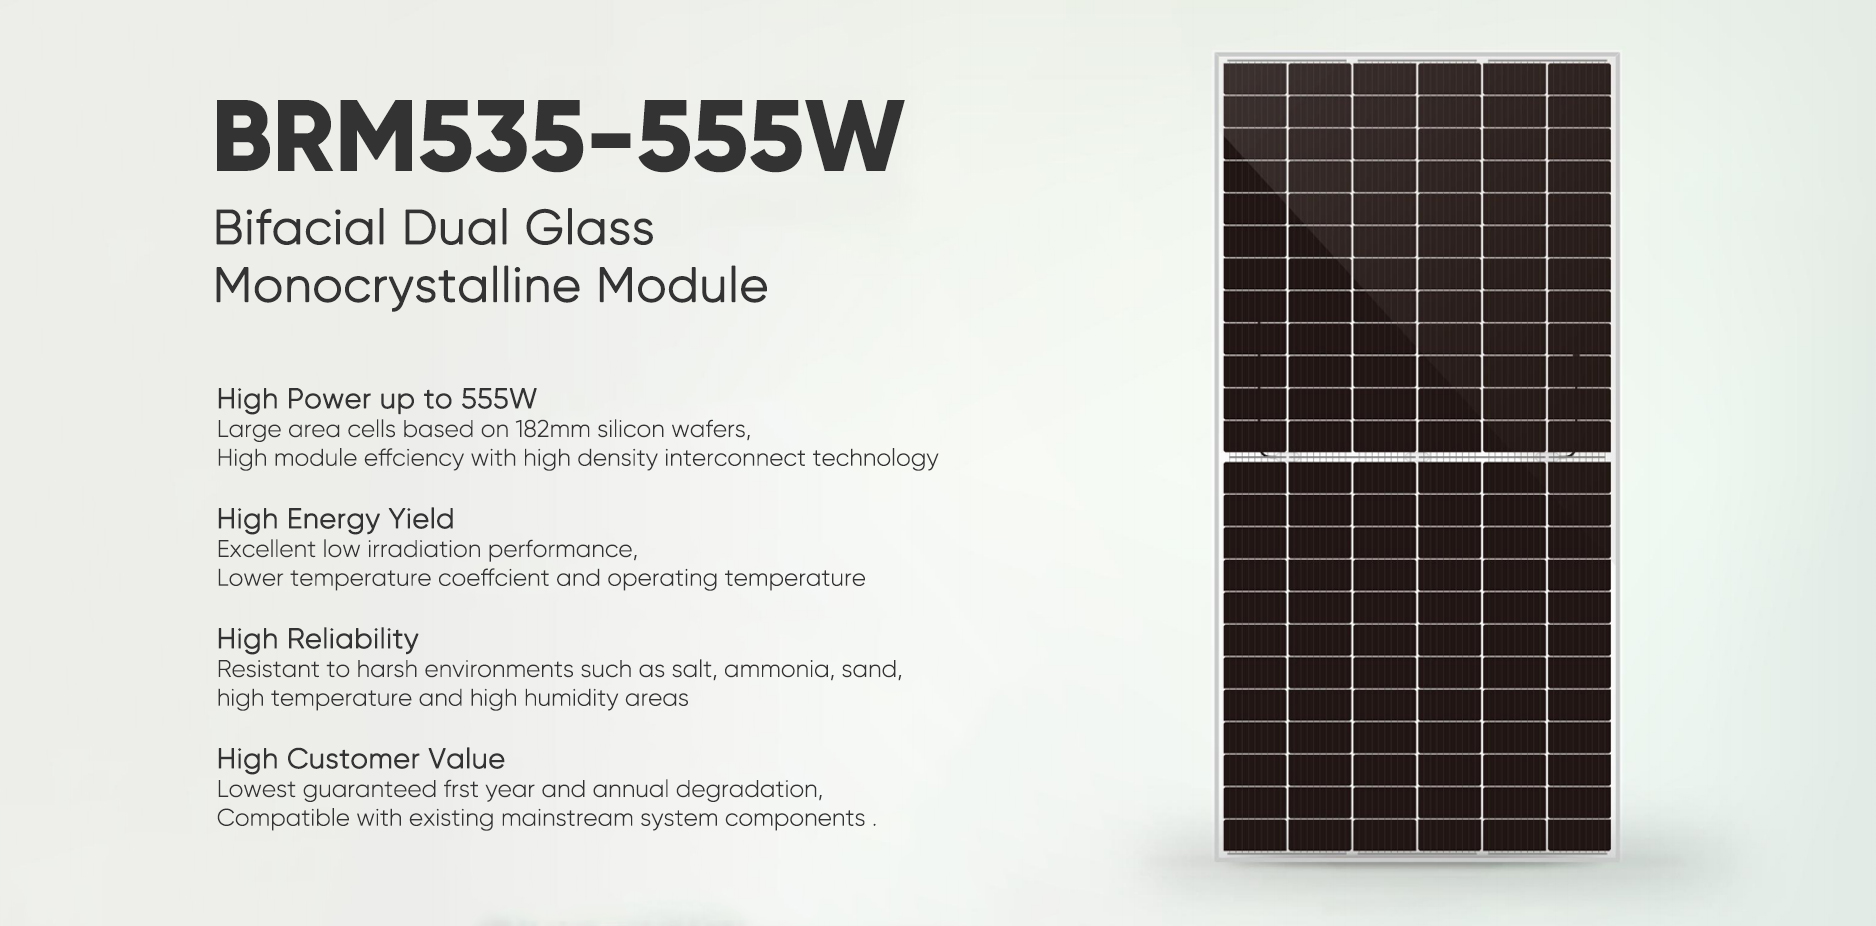 Icyapa-535W-555W Imirasire y'izuba Bifacial Dual Glass Monocrystalline Module